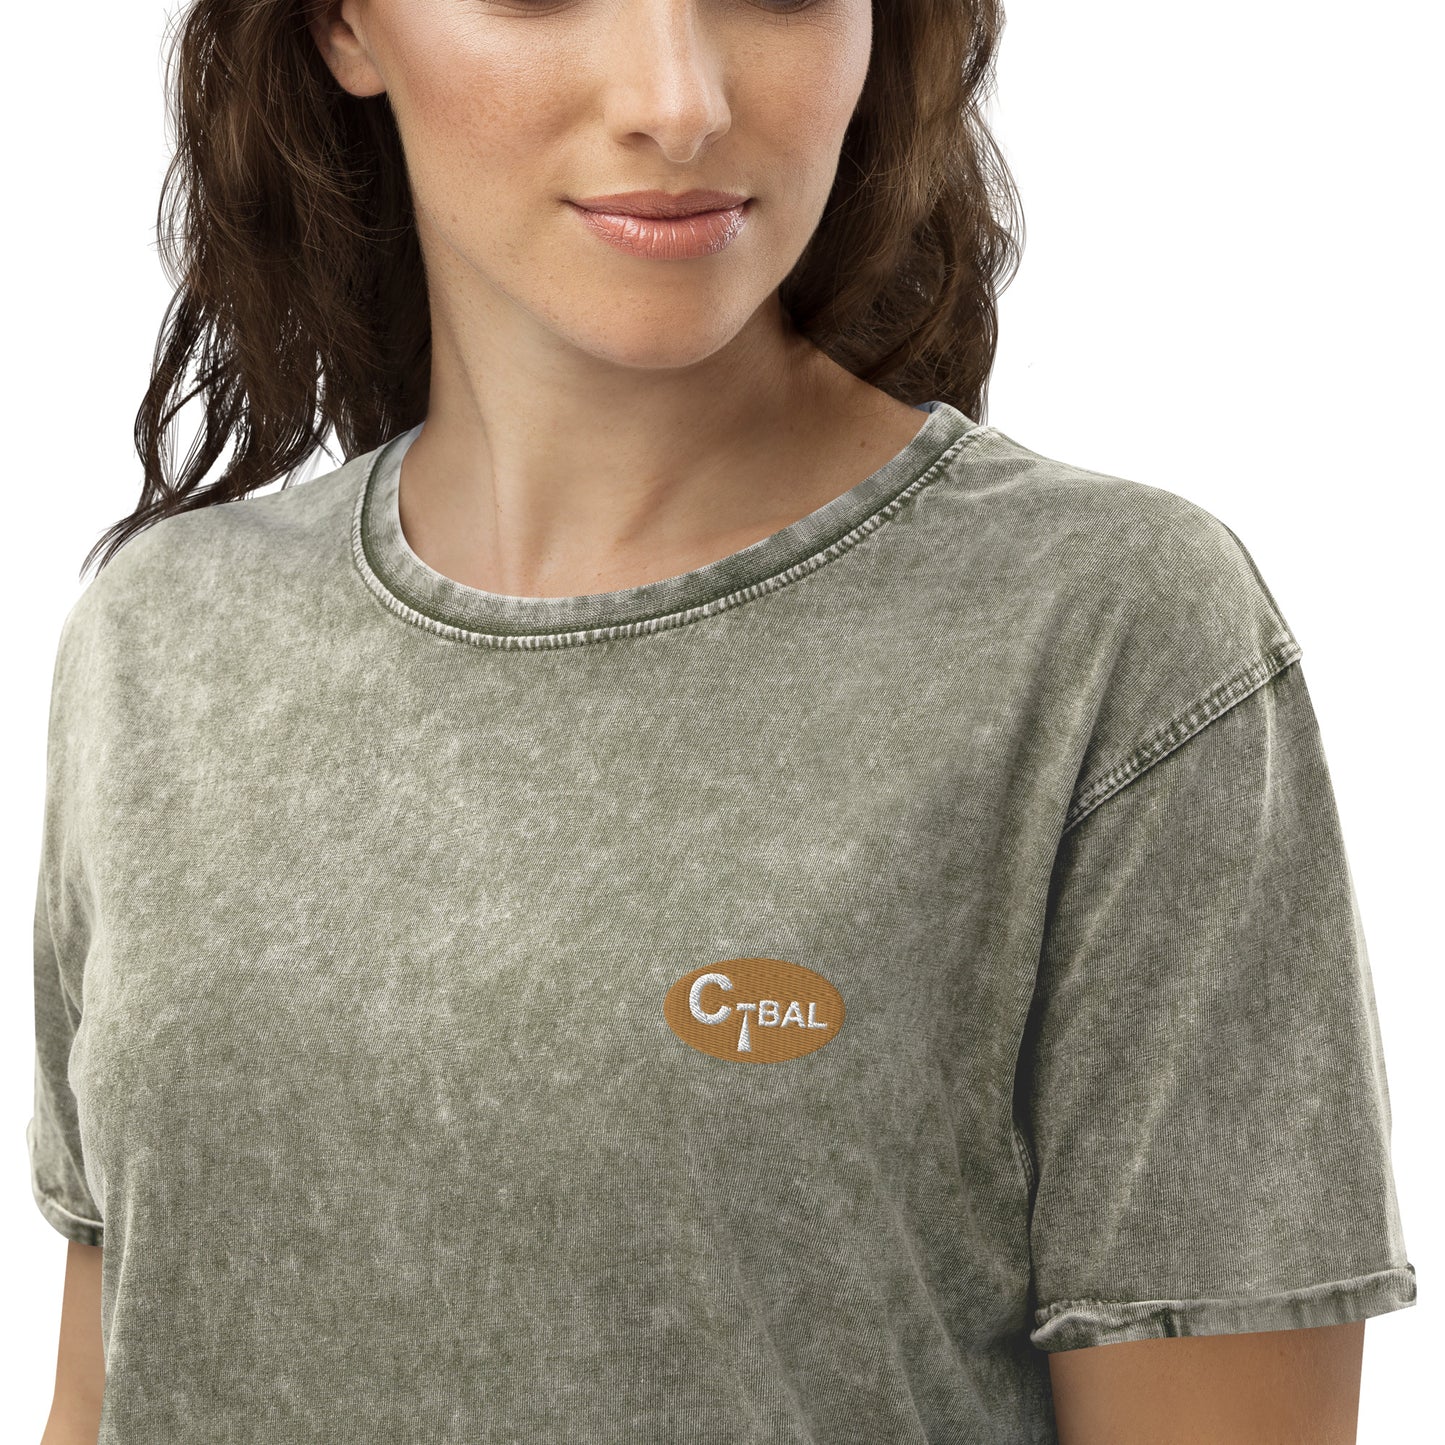 B003 - Denim T-shirt (C-BAL : Brown / Embroidery Logo)